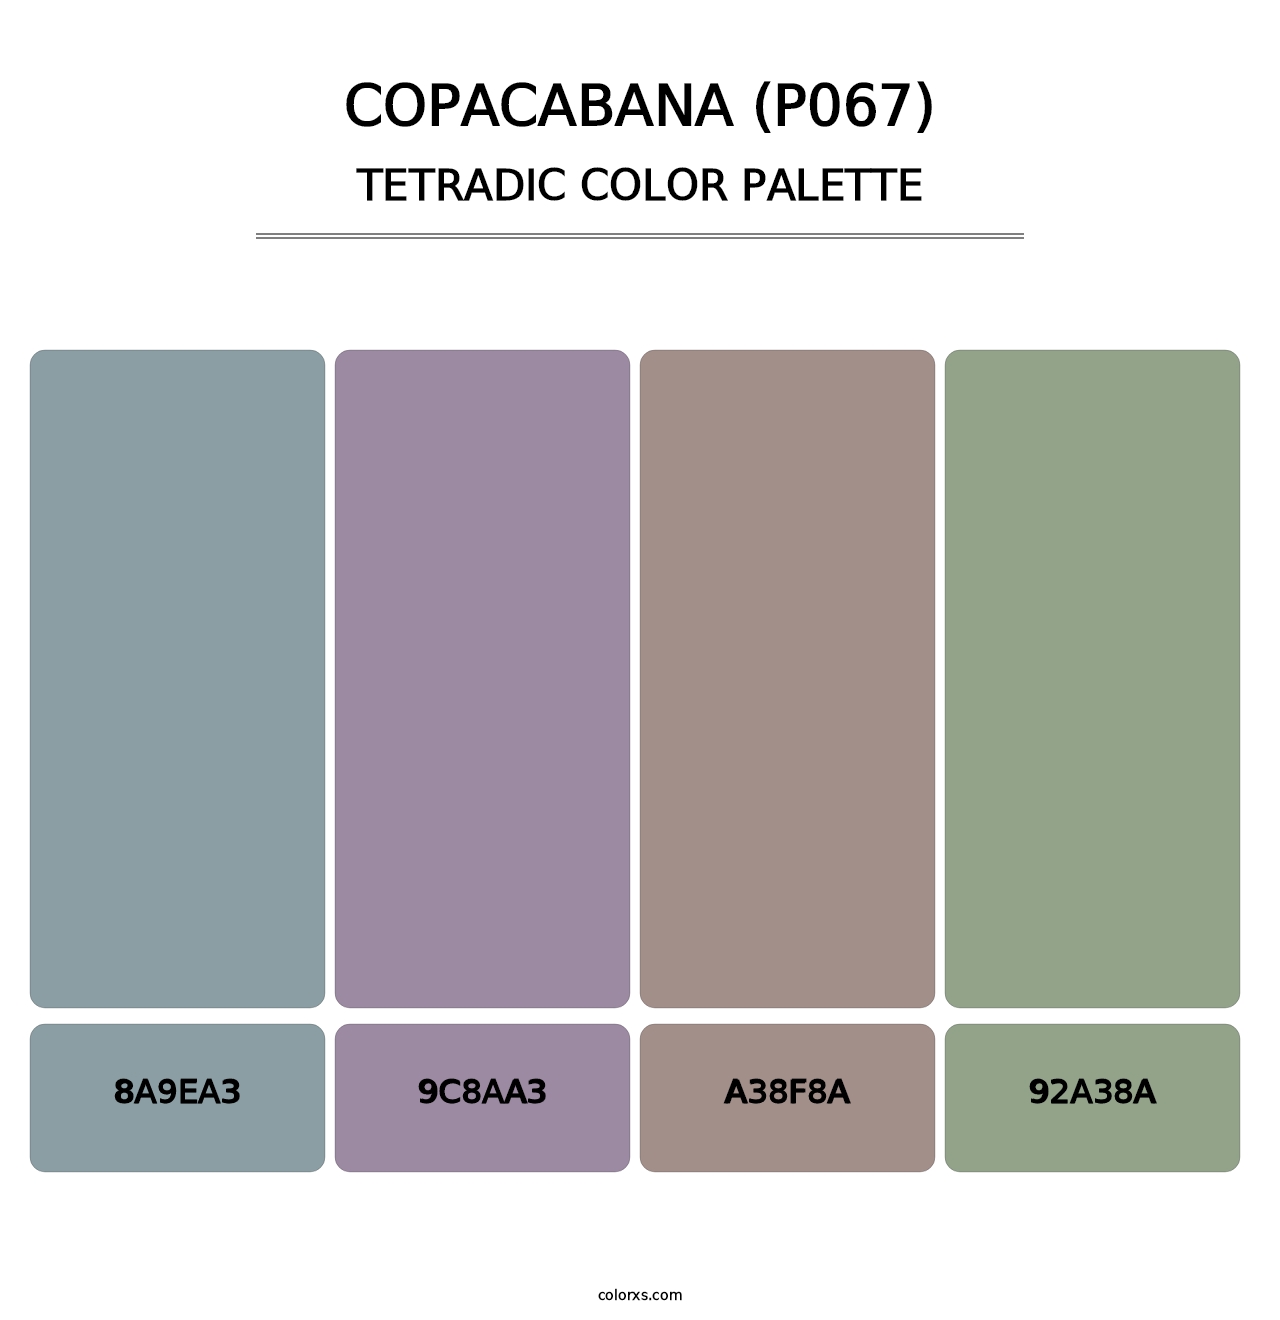 Copacabana (P067) - Tetradic Color Palette